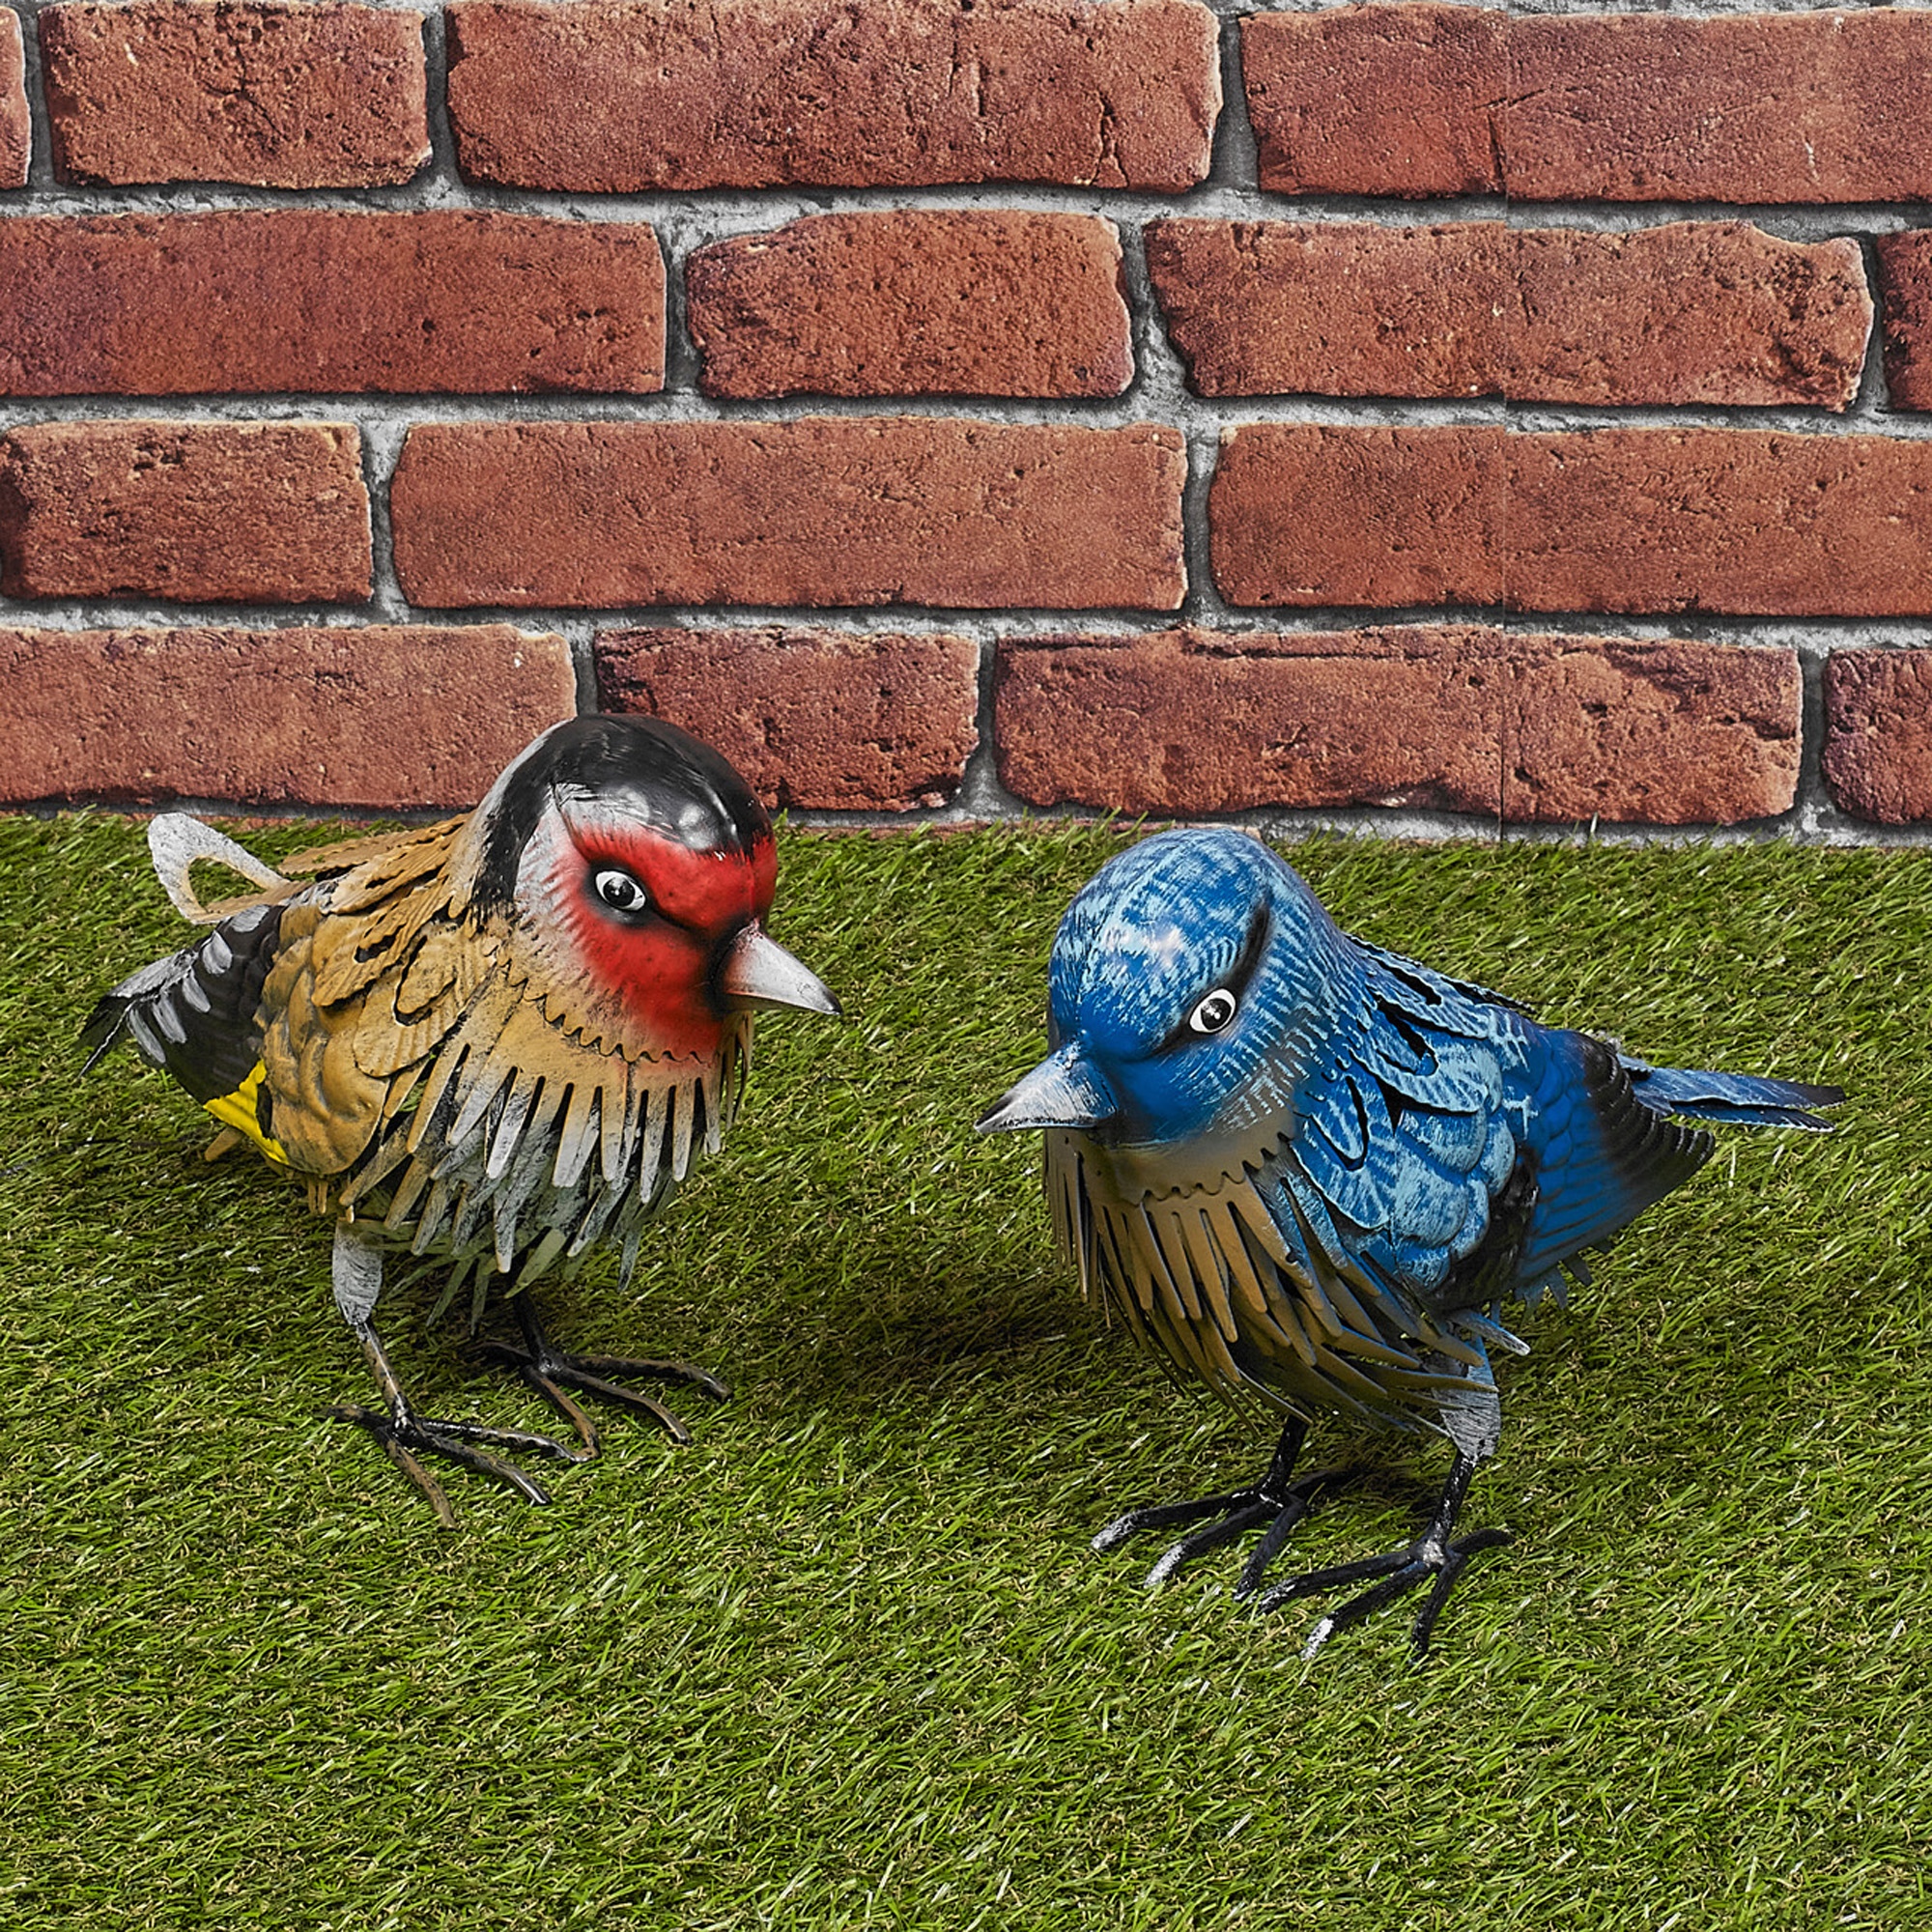 Small Metal Birds Colourful Garden Ornament Sculpture Friendly Features Decor Ebay